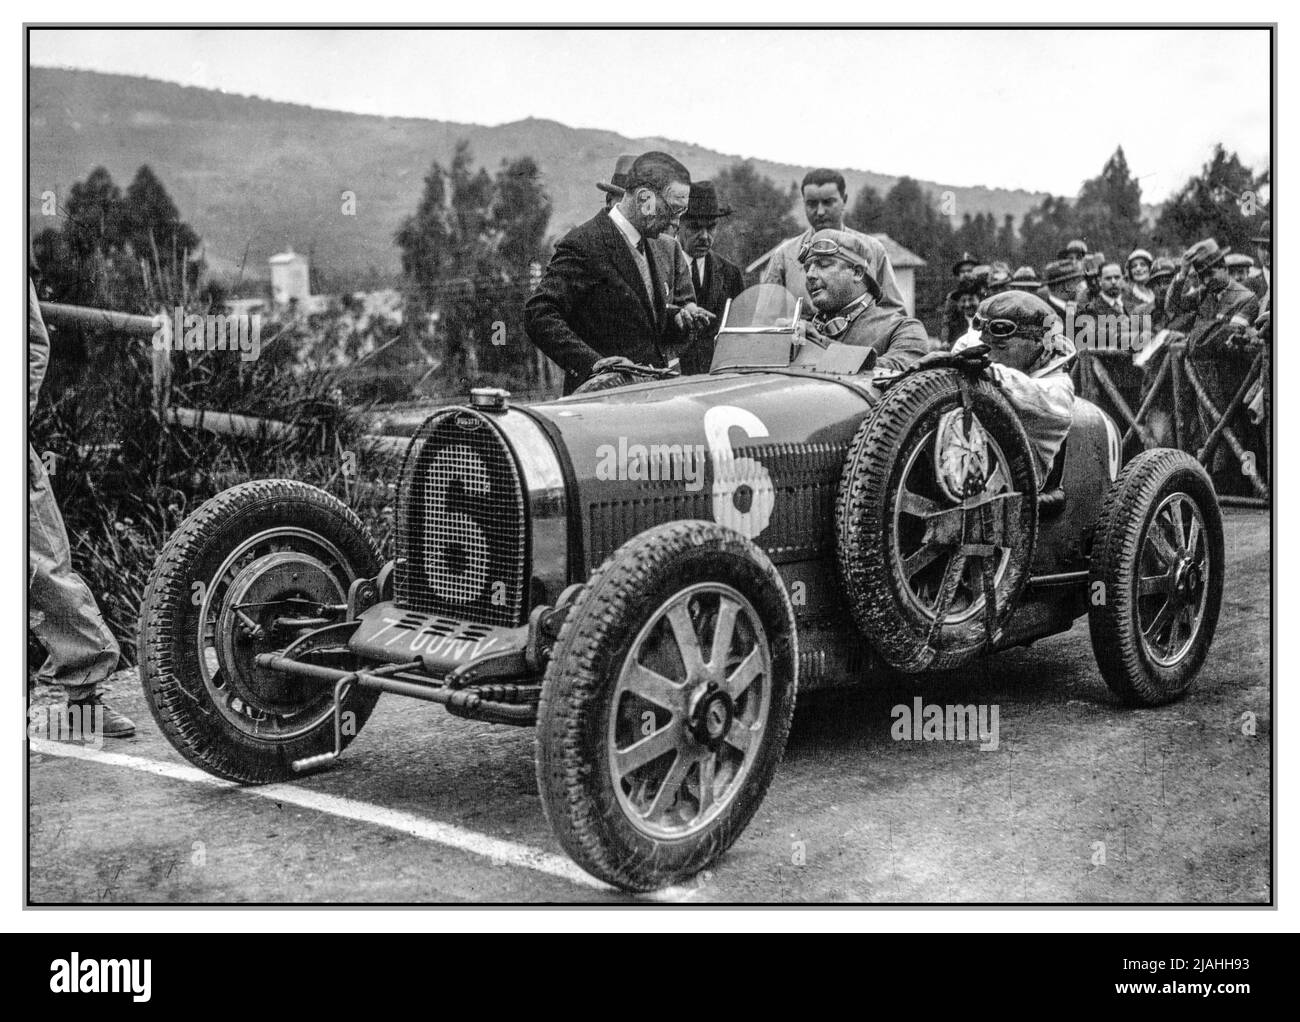 TARGA FLORIO BUGATTI 1930 Entry #6 in the 1930 Targa Florio is Albert Divo in a Bugatti Type 35B. Ready to go at the start line  4 May 1930 Stock Photo